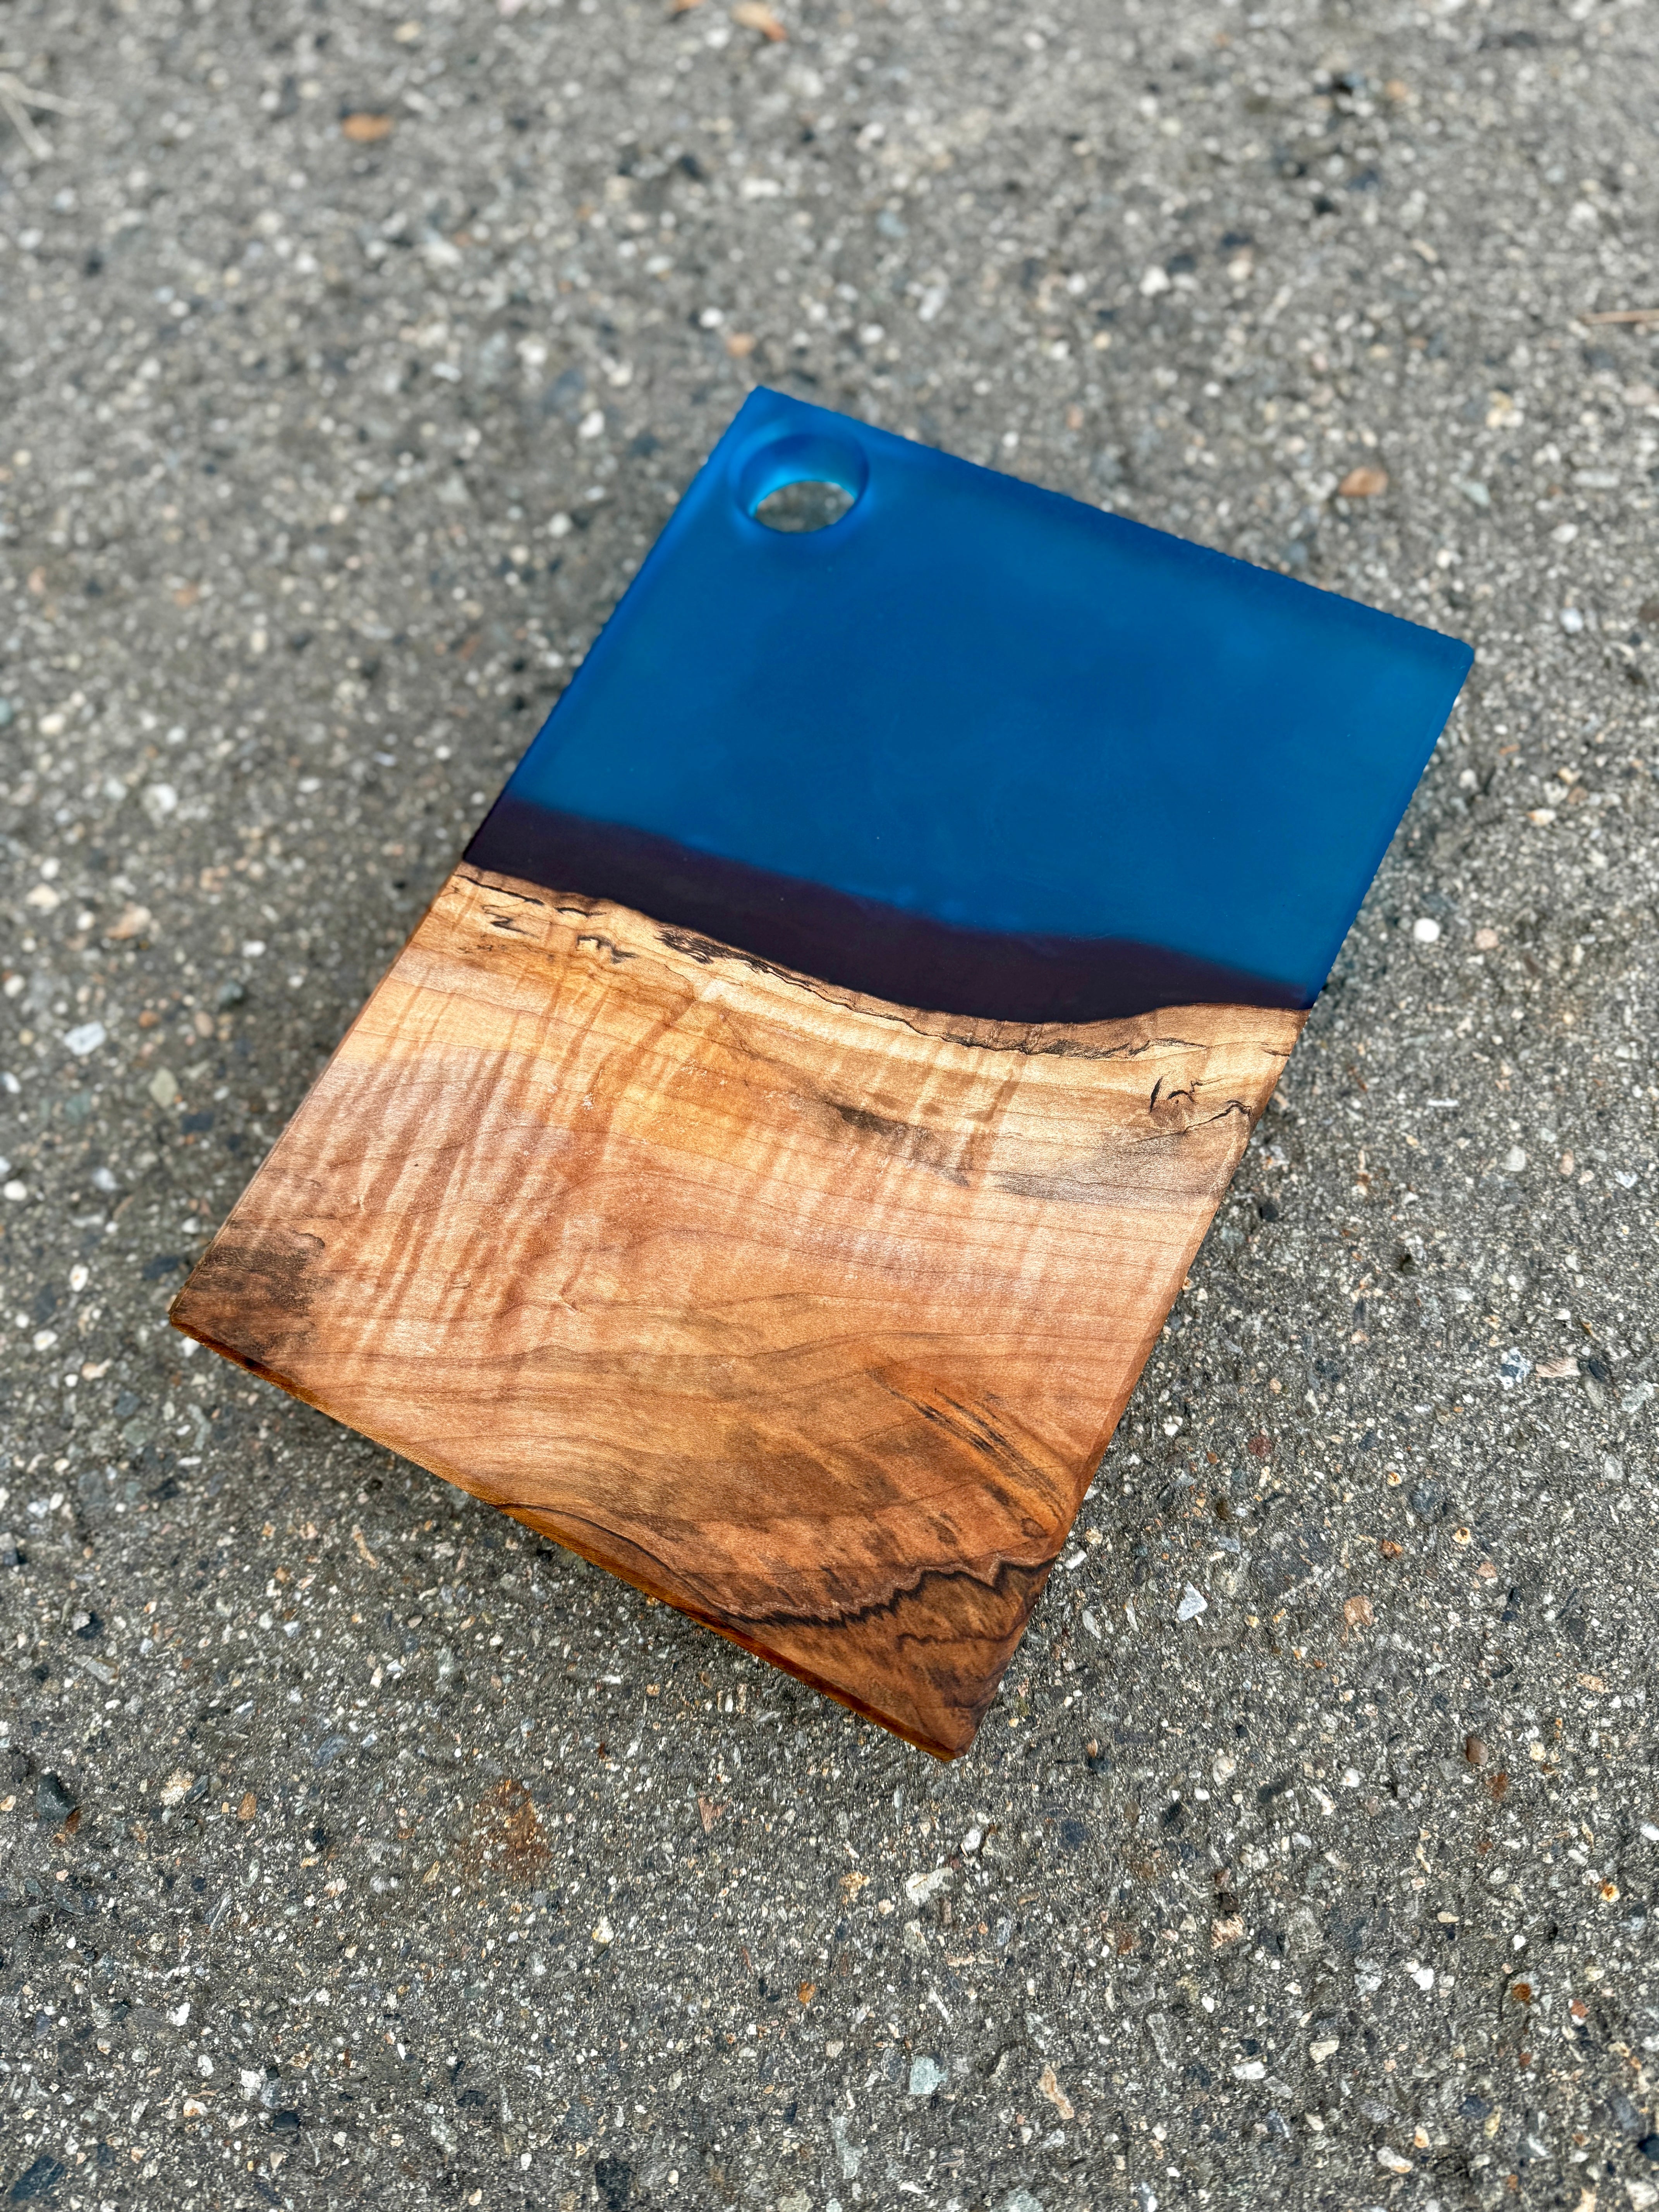 Silver Maple & Transparent Blue Resin Charcuterie Board